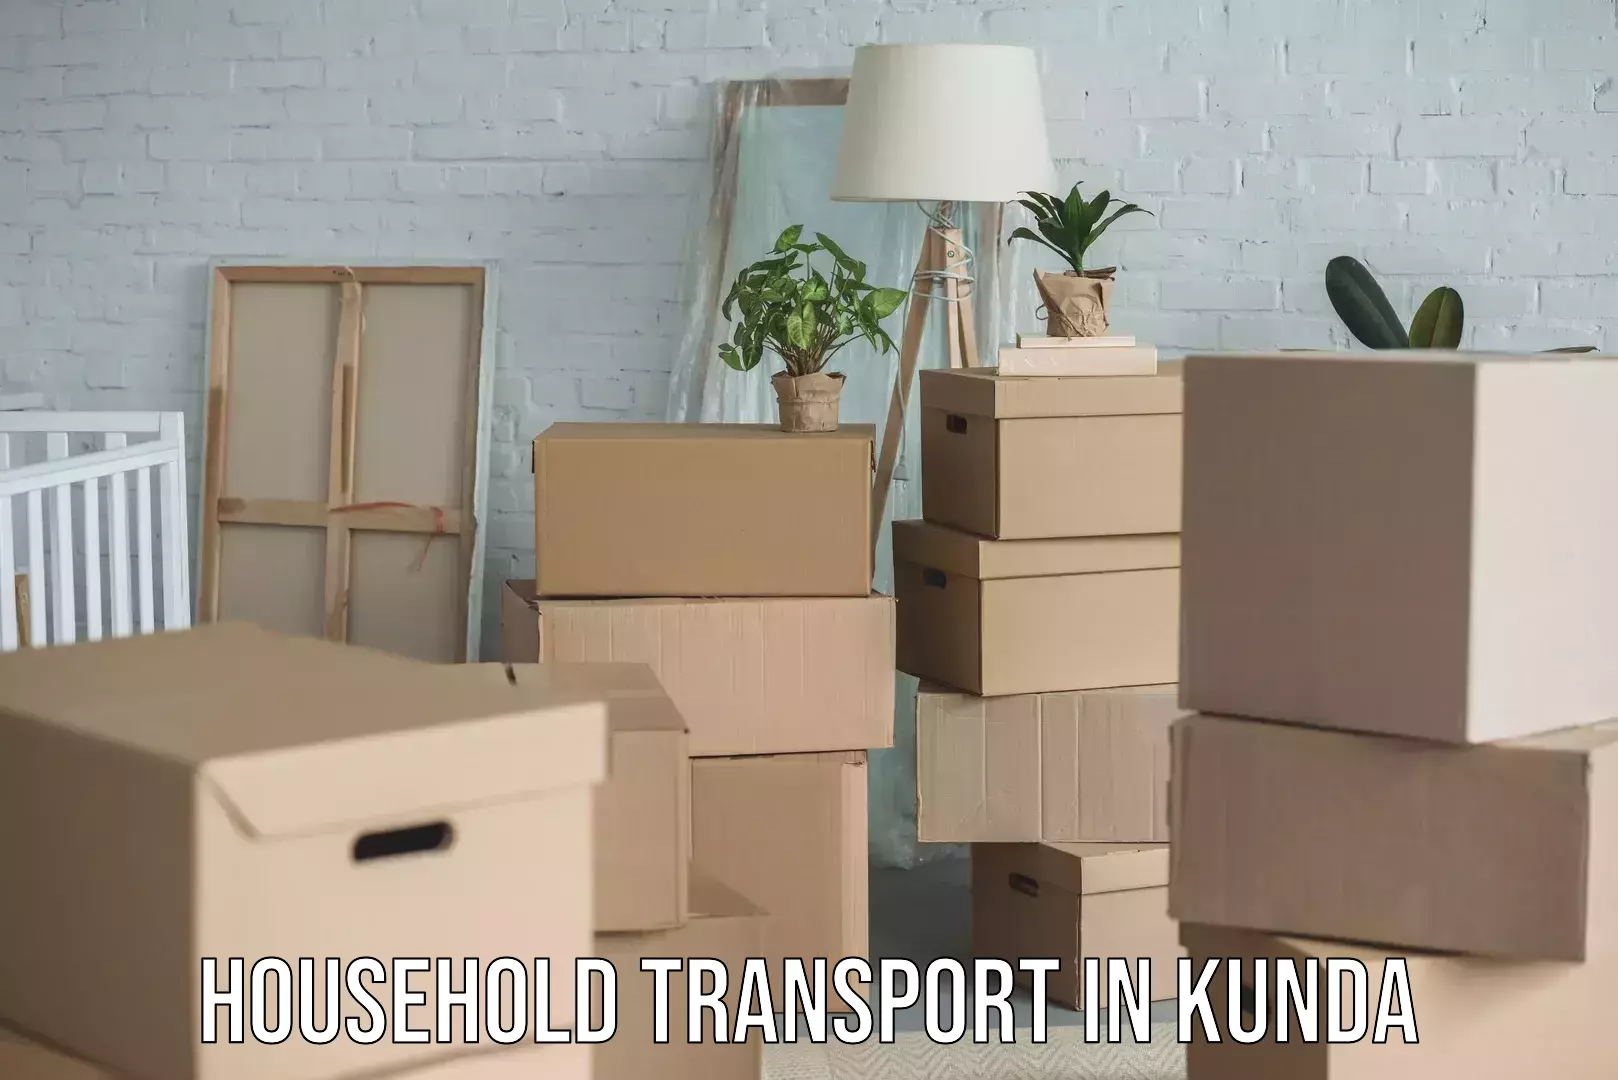 Professional furniture movers in Kunda